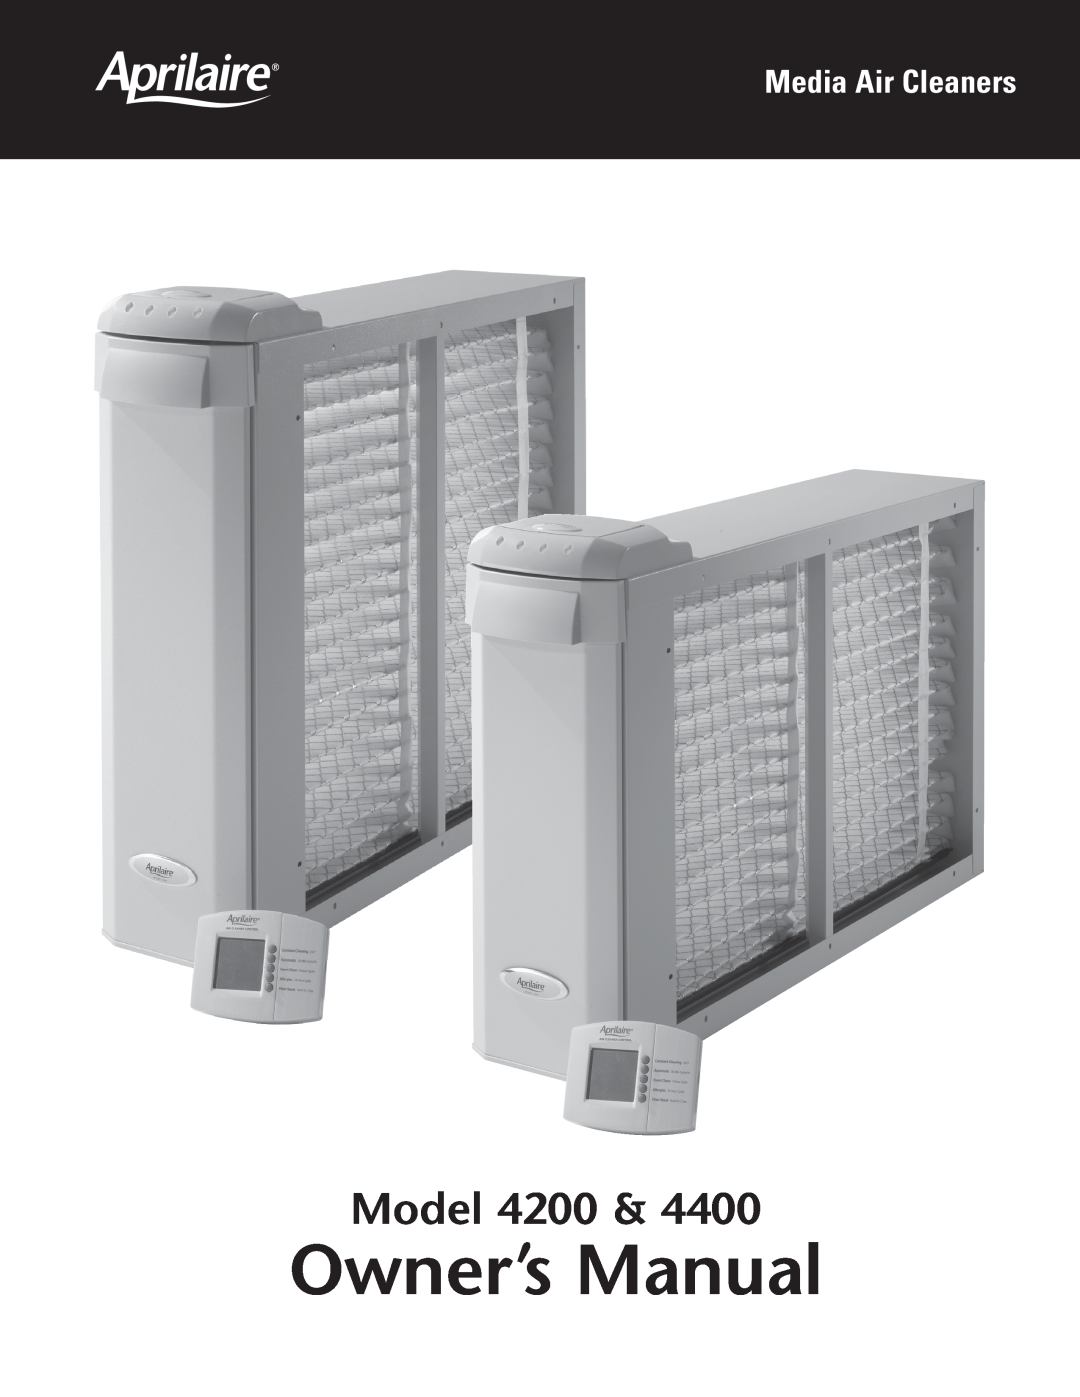 Aprilaire 4200, 4400 owner manual Model, Media Air Cleaners 